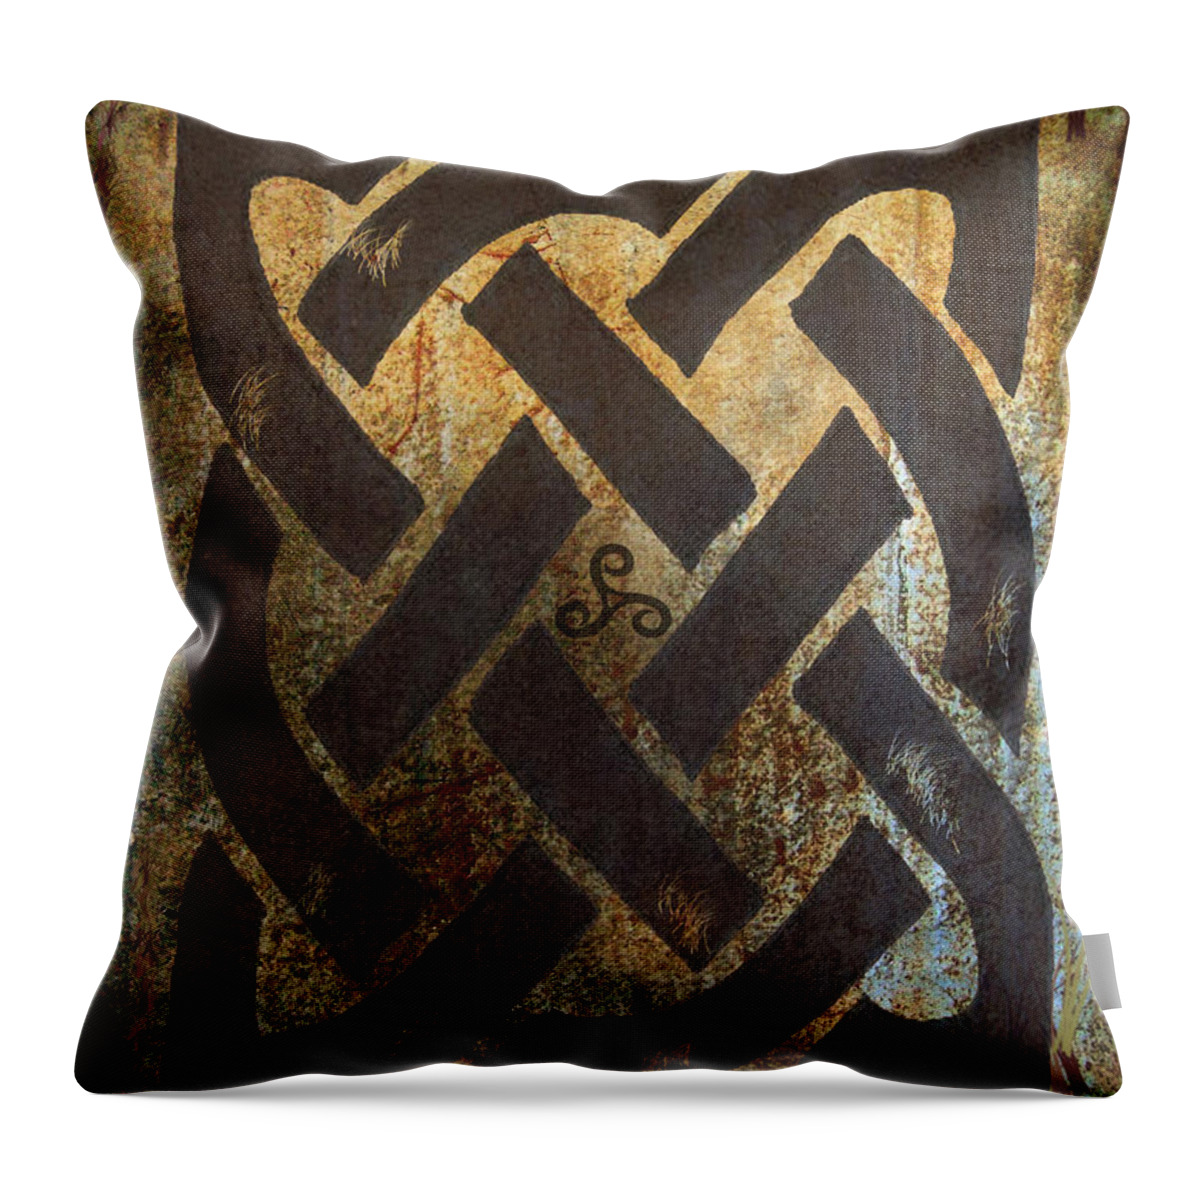 The Dara Celtic Symbol Throw Pillow featuring the digital art The Dara Celtic Symbol by Kandy Hurley